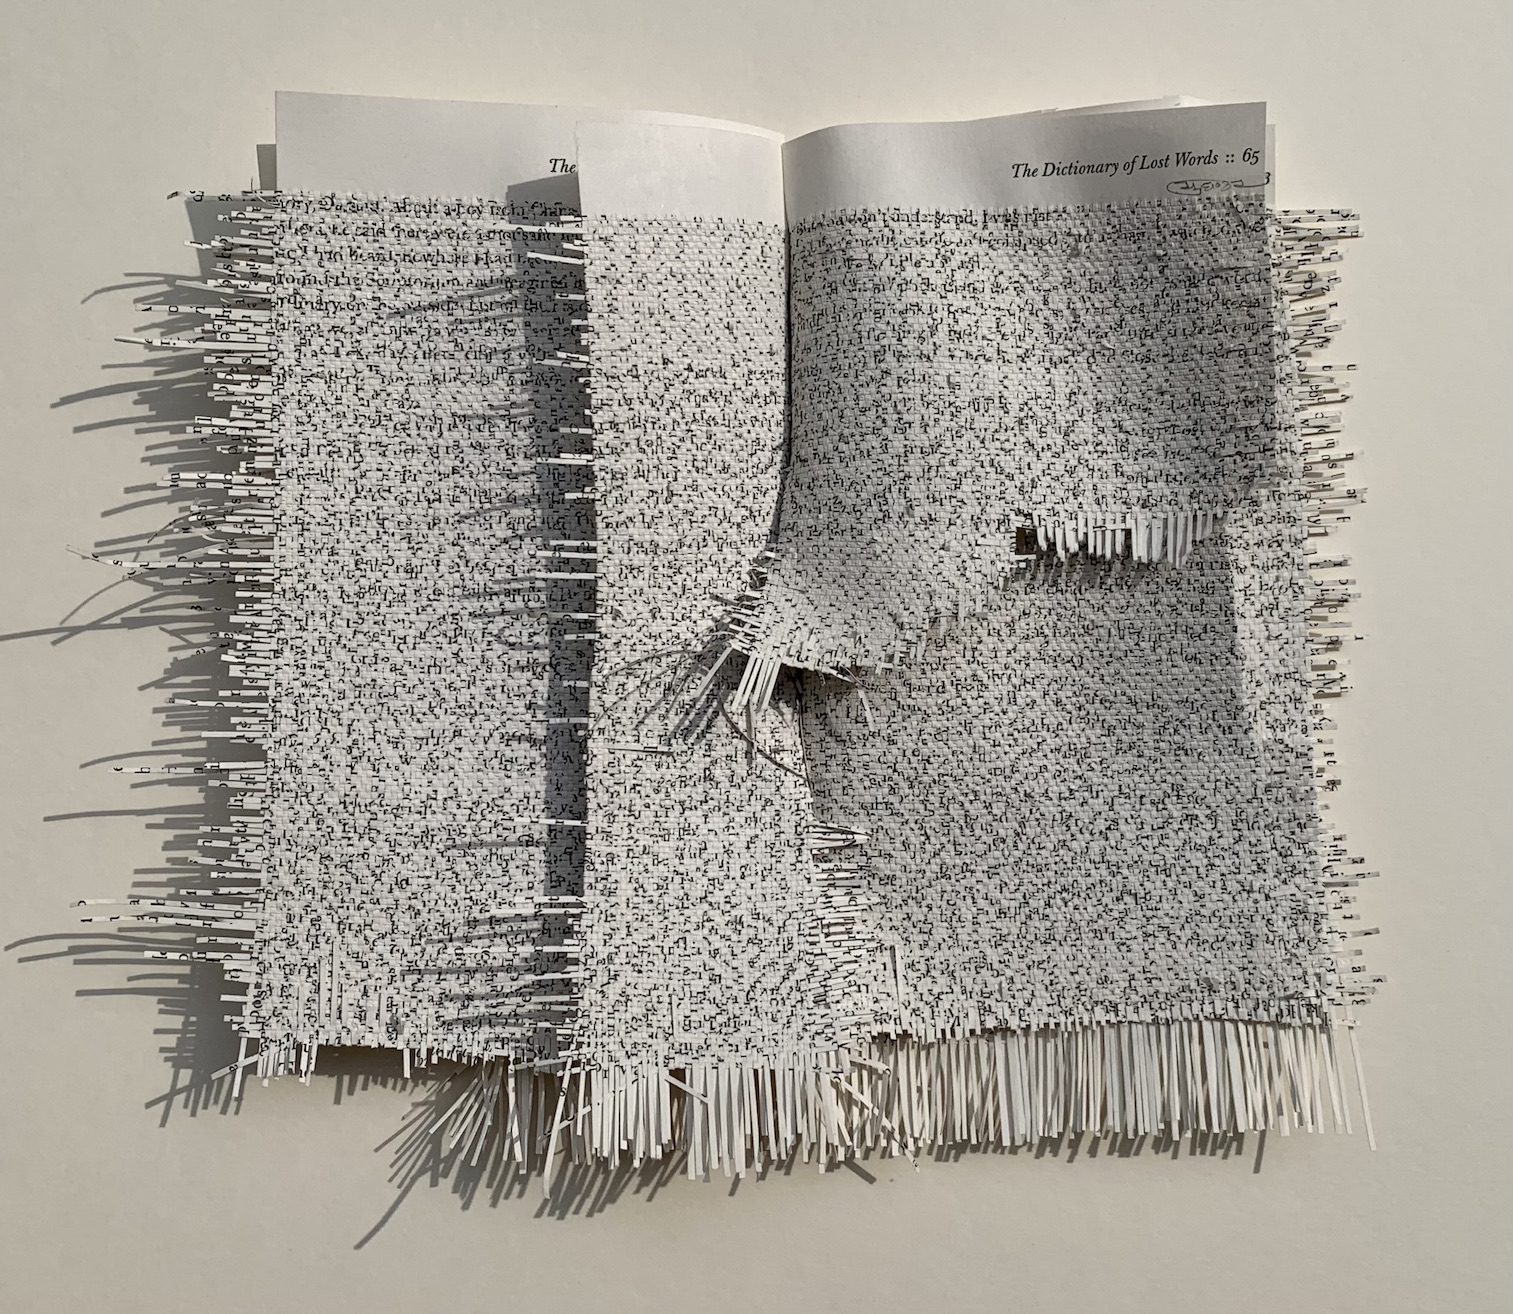 Youdhisthir Maharjan, Art Dubai23, book pages, text in art